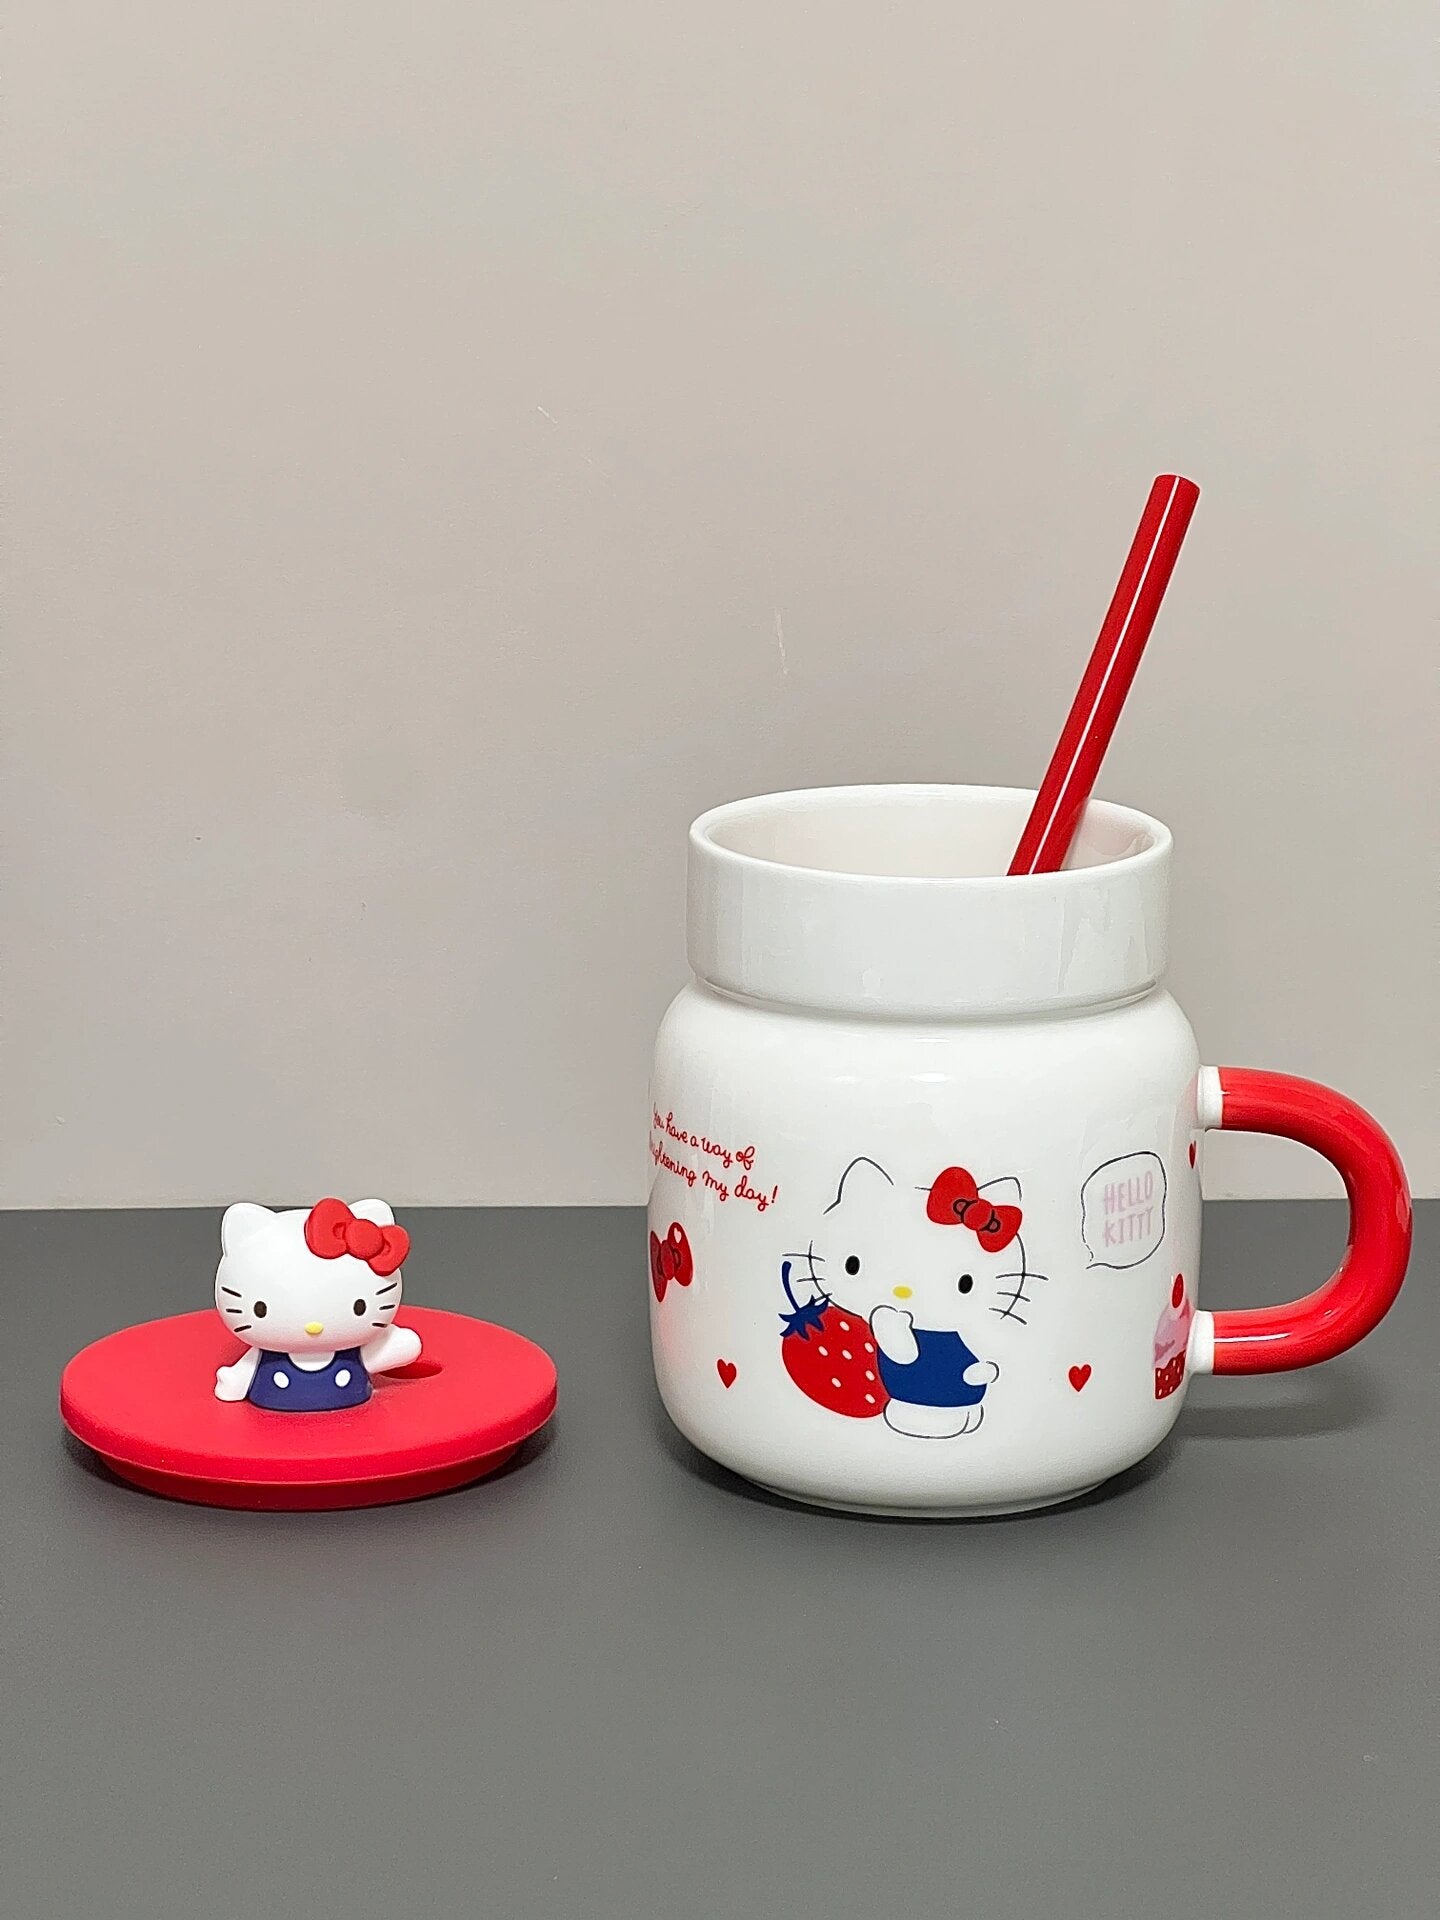 Sanrio Ceramic Coffee Cup with Silicone Lid Spoon Tea Cup Milk Mug Gift